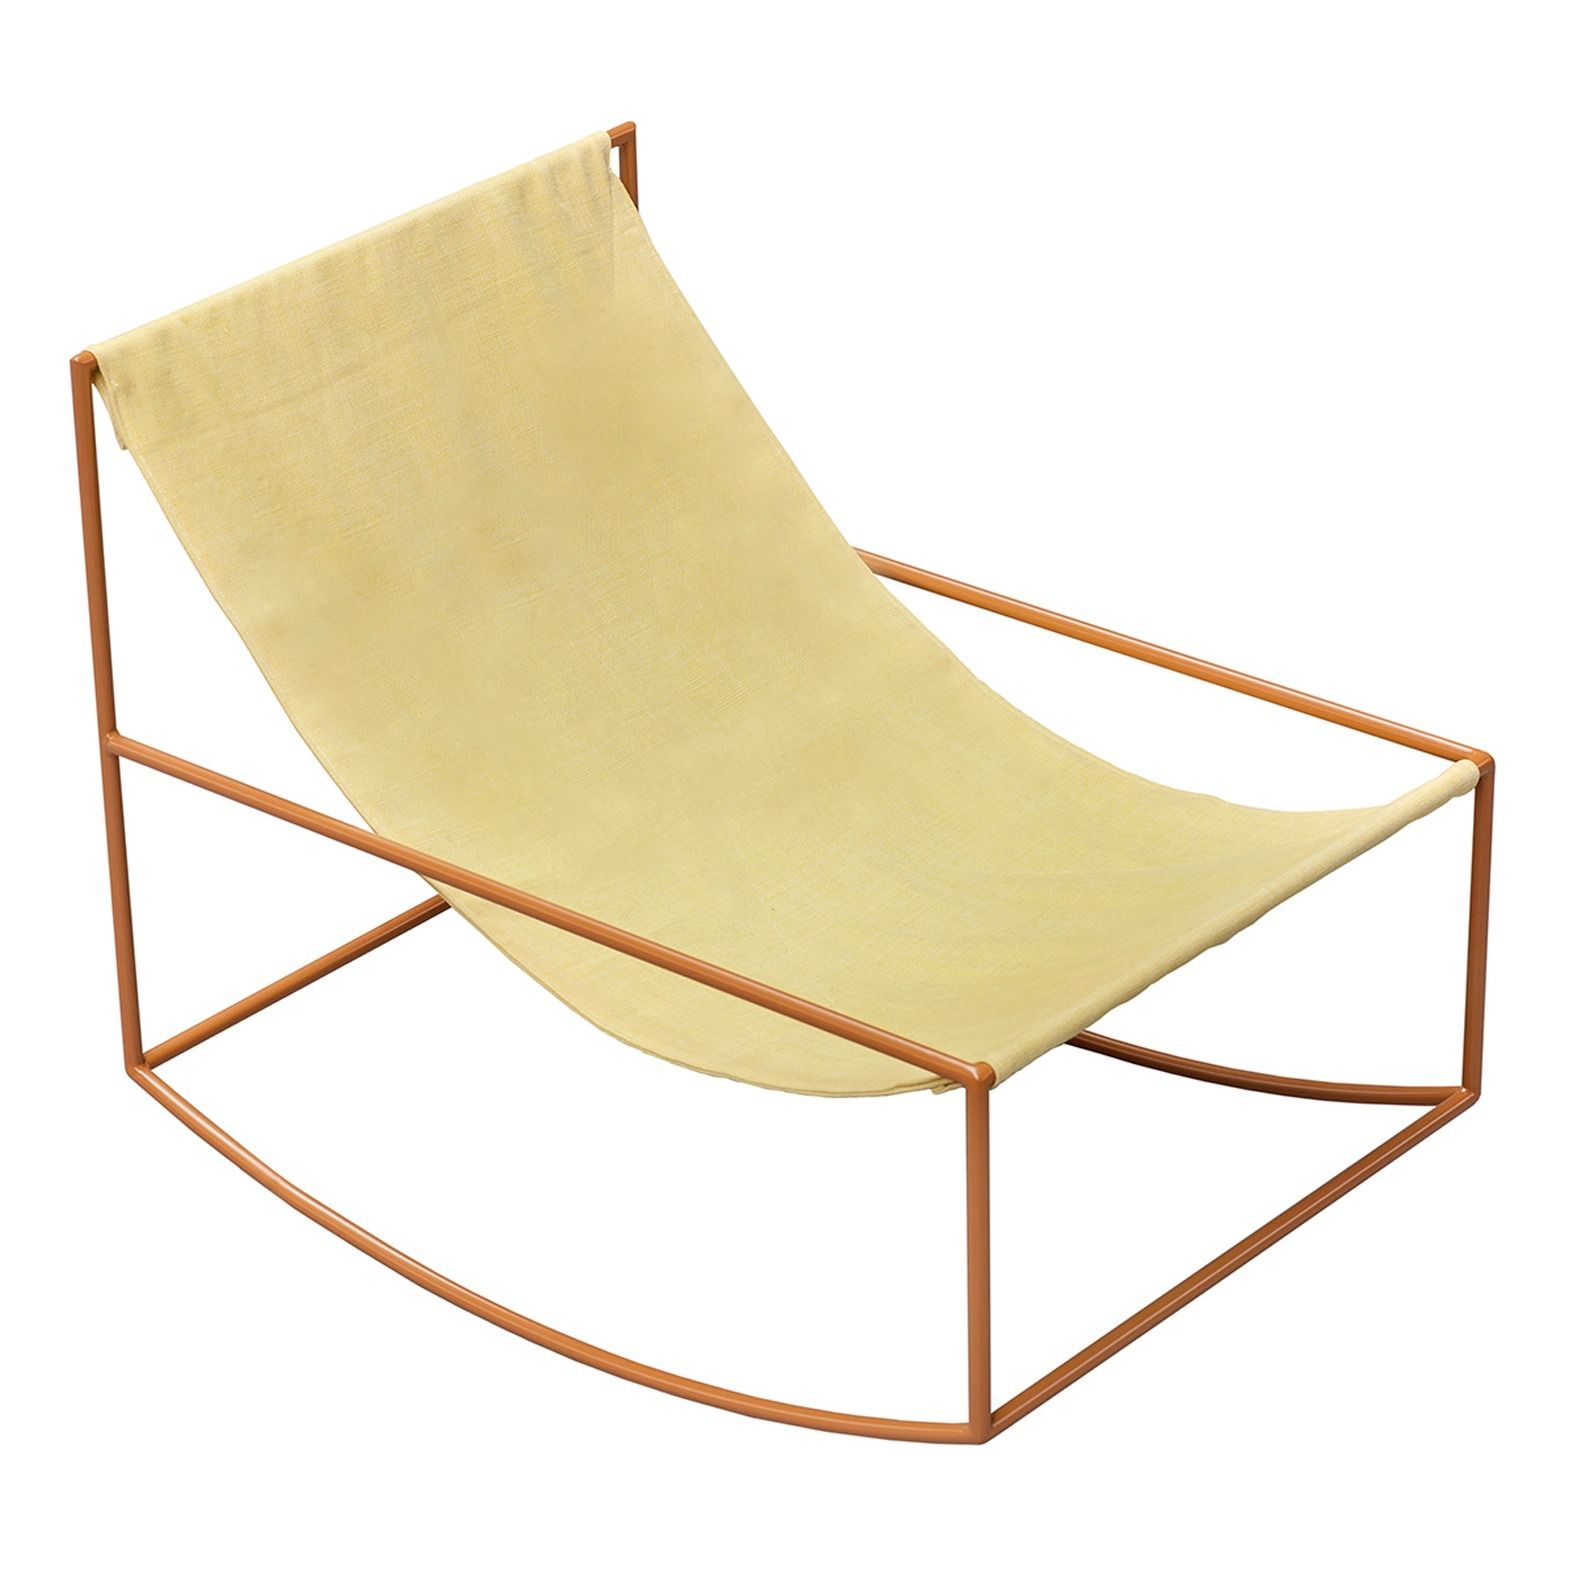 Valerie Objects - Fauteuil en lin Rocking Chair - Jaune